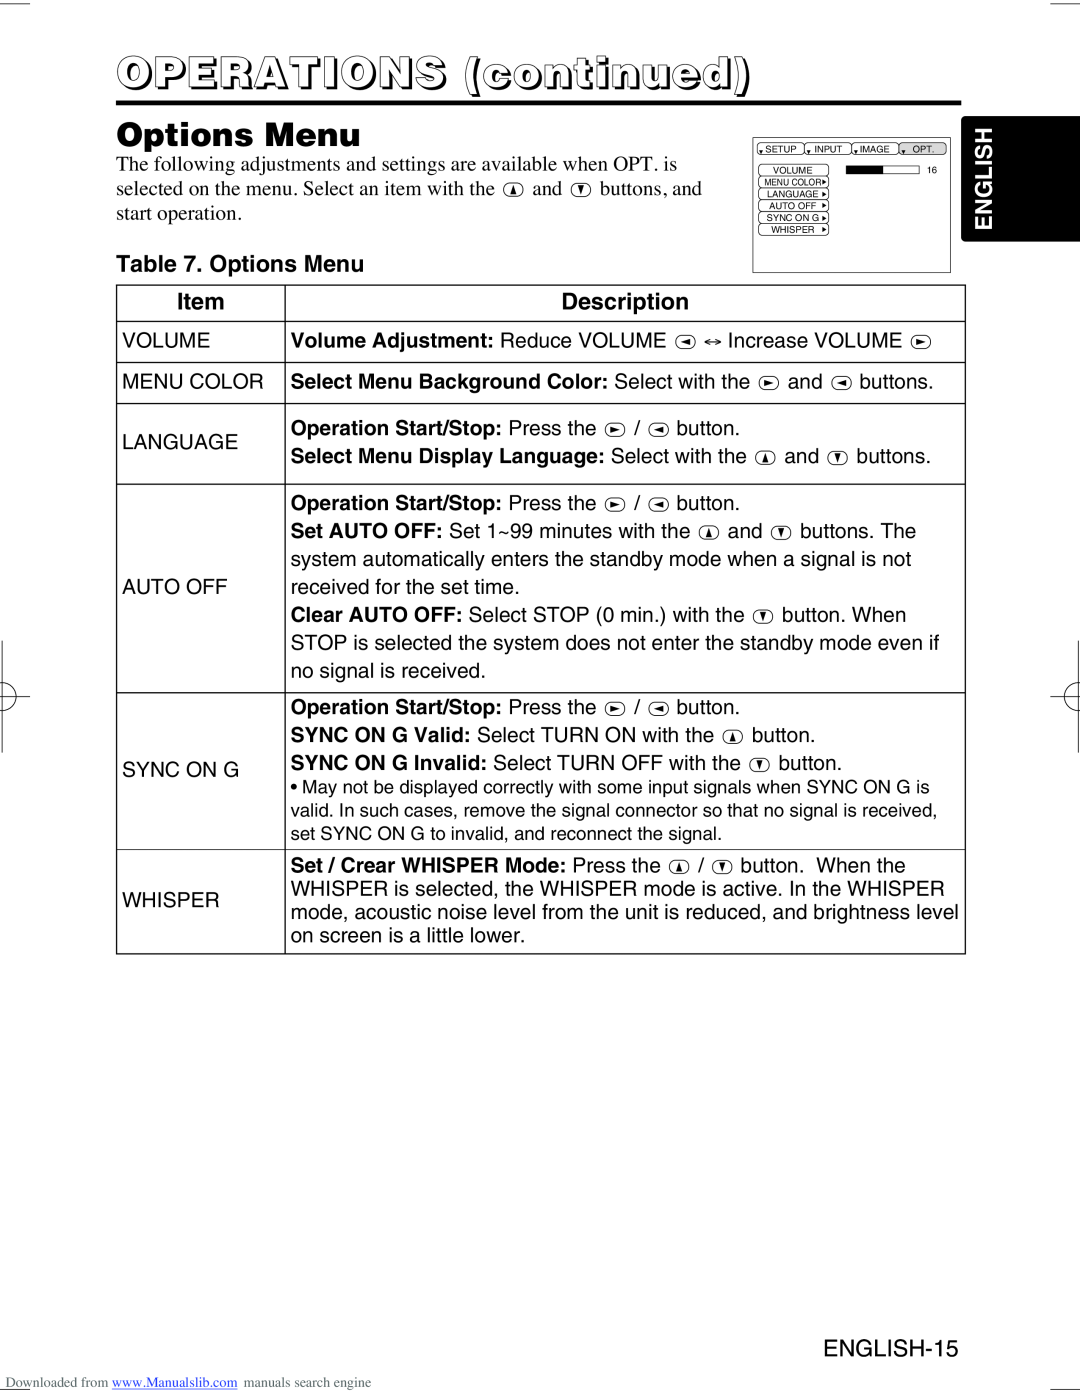 Hitachi CP-X995W user manual Options Menu, OPERATIONS continued, English, Description 